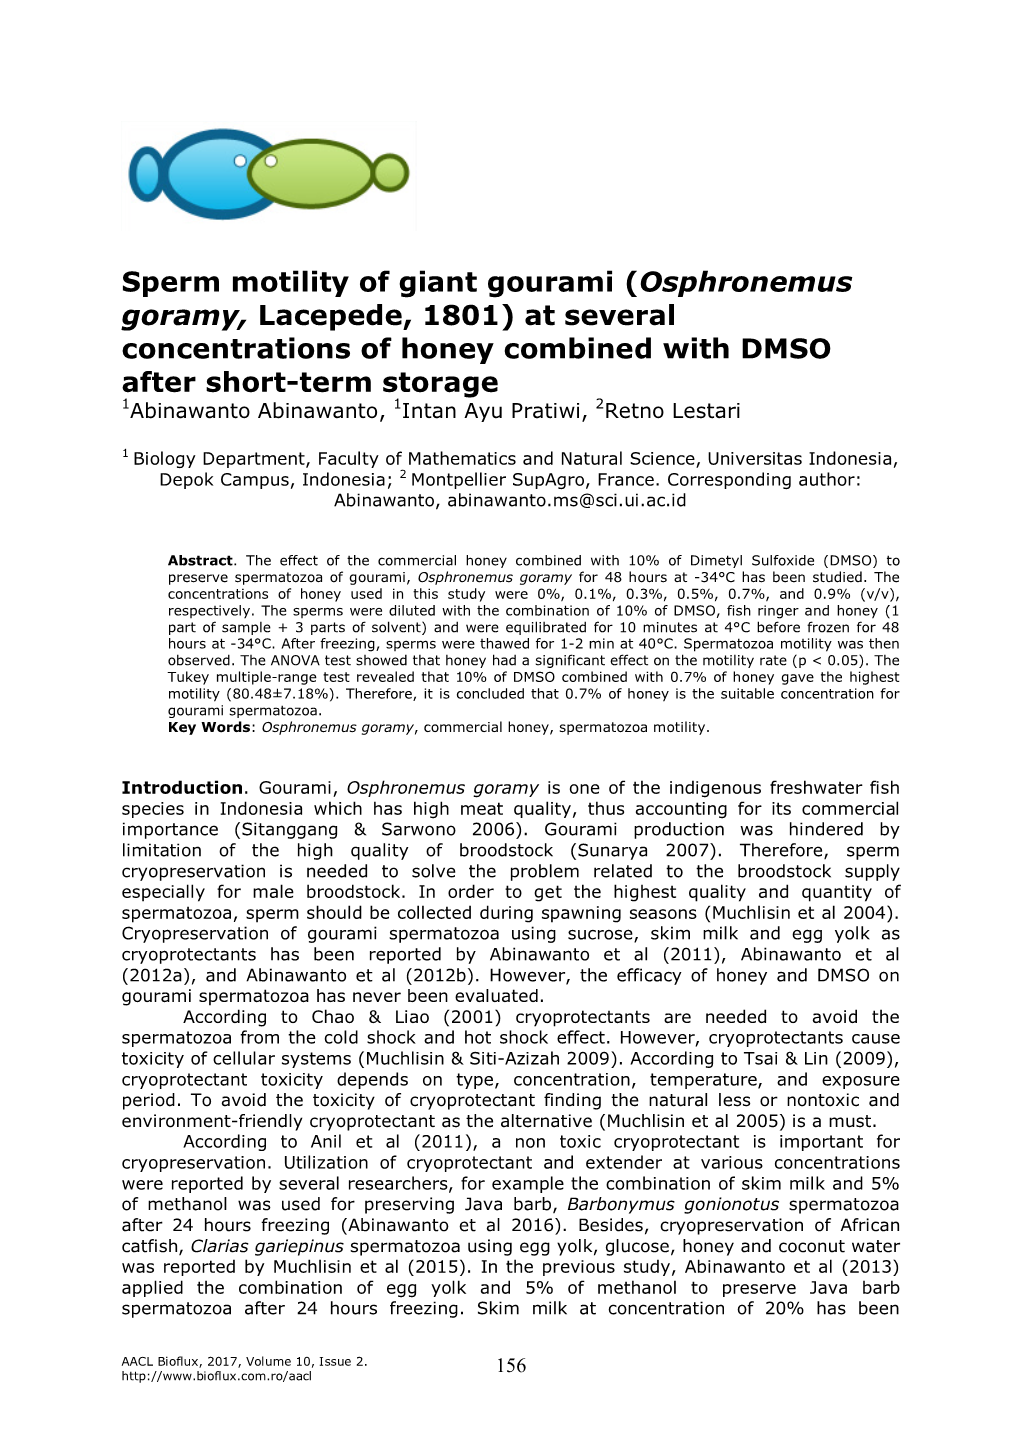 Sperm Motility of Giant Gourami (Osphronemus Goramy, Lacepede